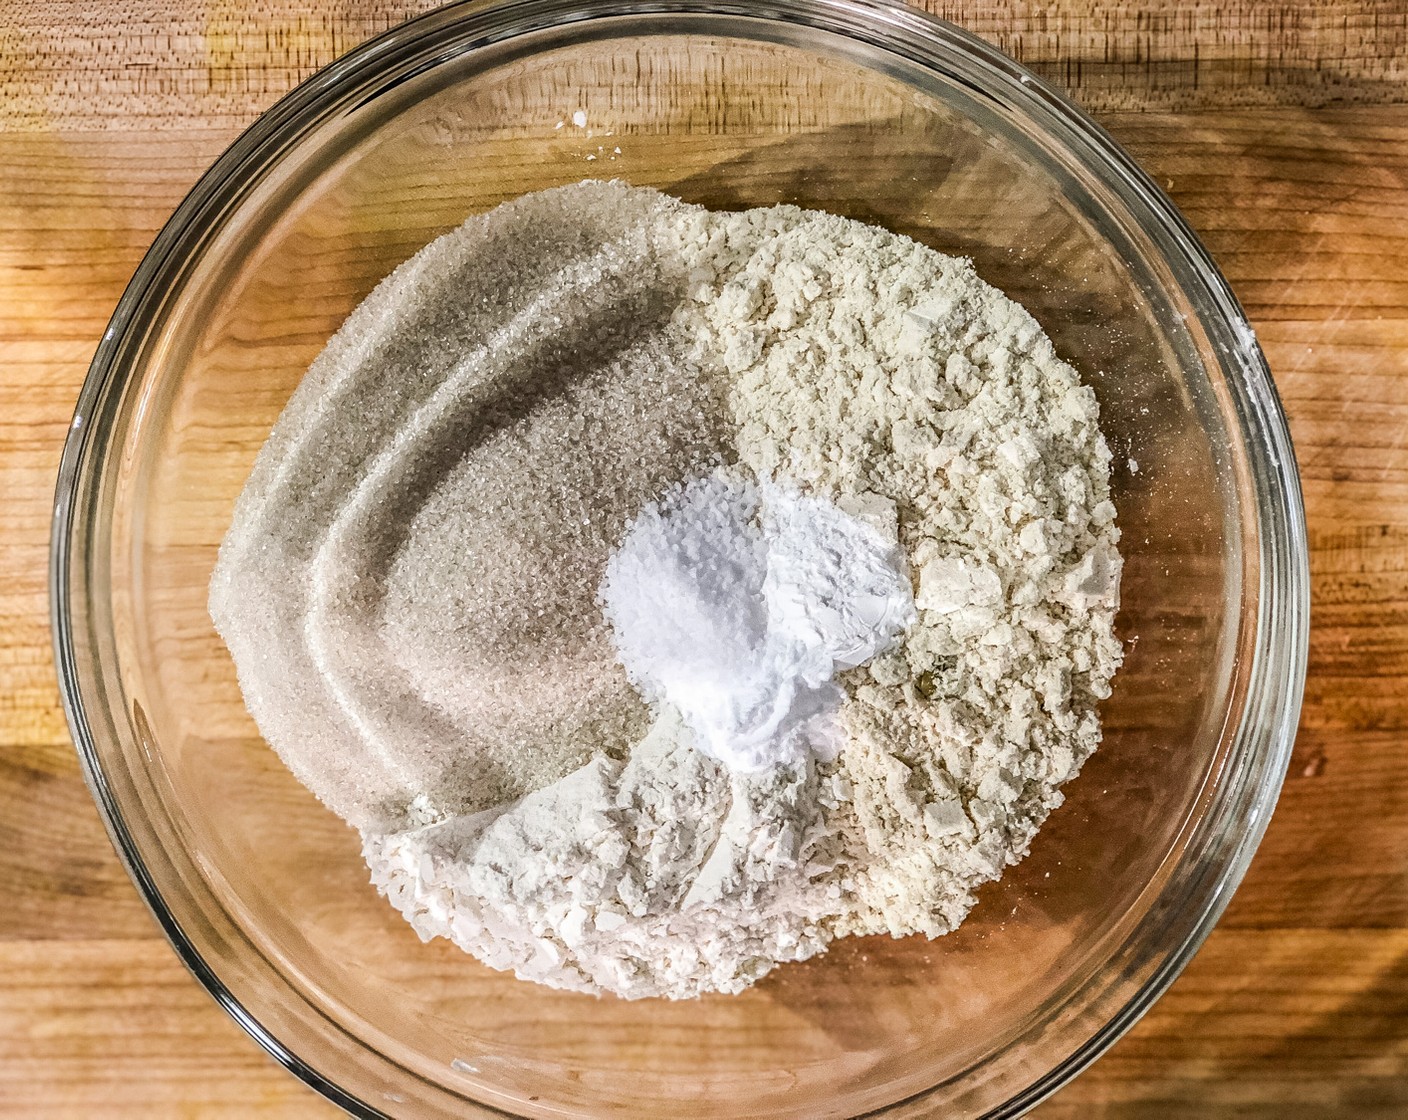 step 6 In a bowl mix the Corn Masa Flour (3/4 cup), All-Purpose Flour (1/4 cup), Baking Soda (1/2 tsp), Baking Powder (1/2 tsp), Granulated Sugar (1/2 cup), and Salt (1/2 tsp) together.